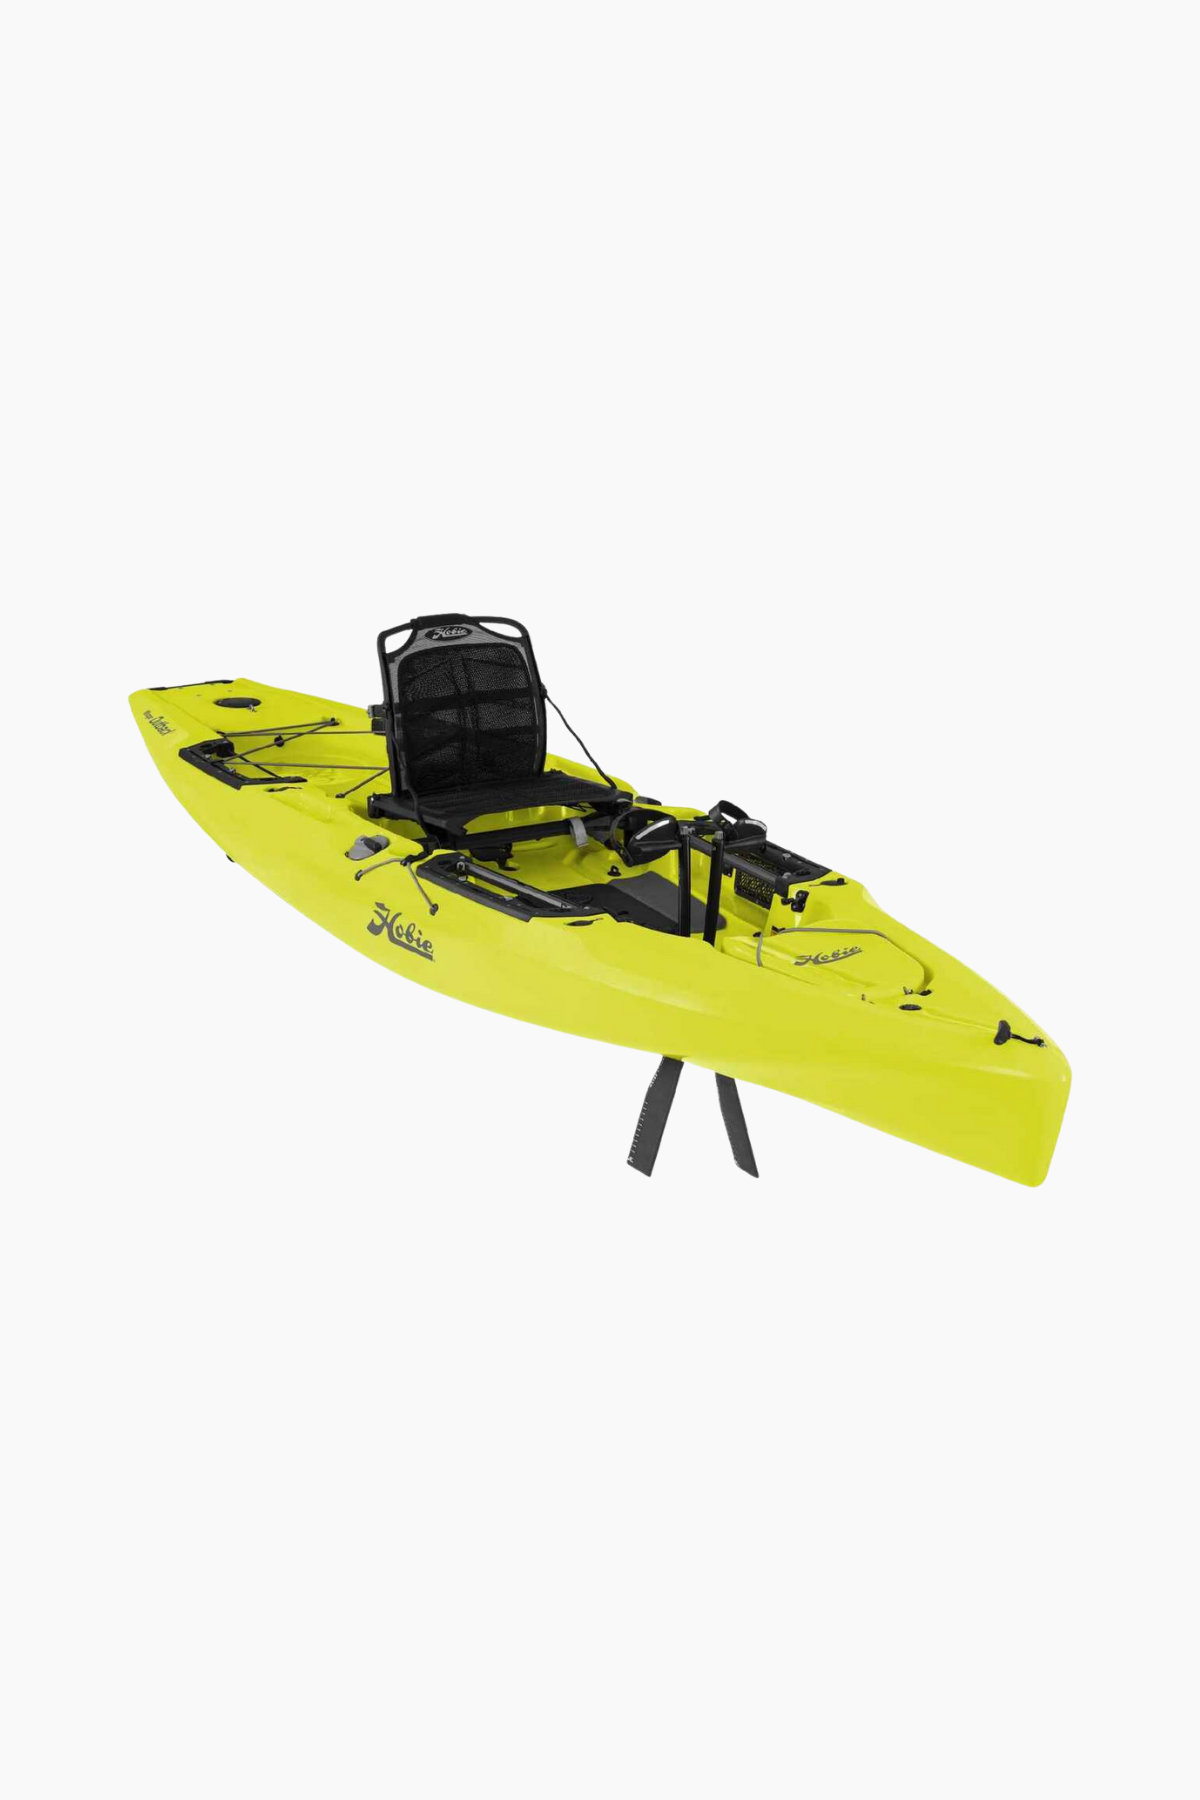 Hobie Mirage Outback Pedal Kayak - Cottage Toys - Peterborough - Ontario - Canada